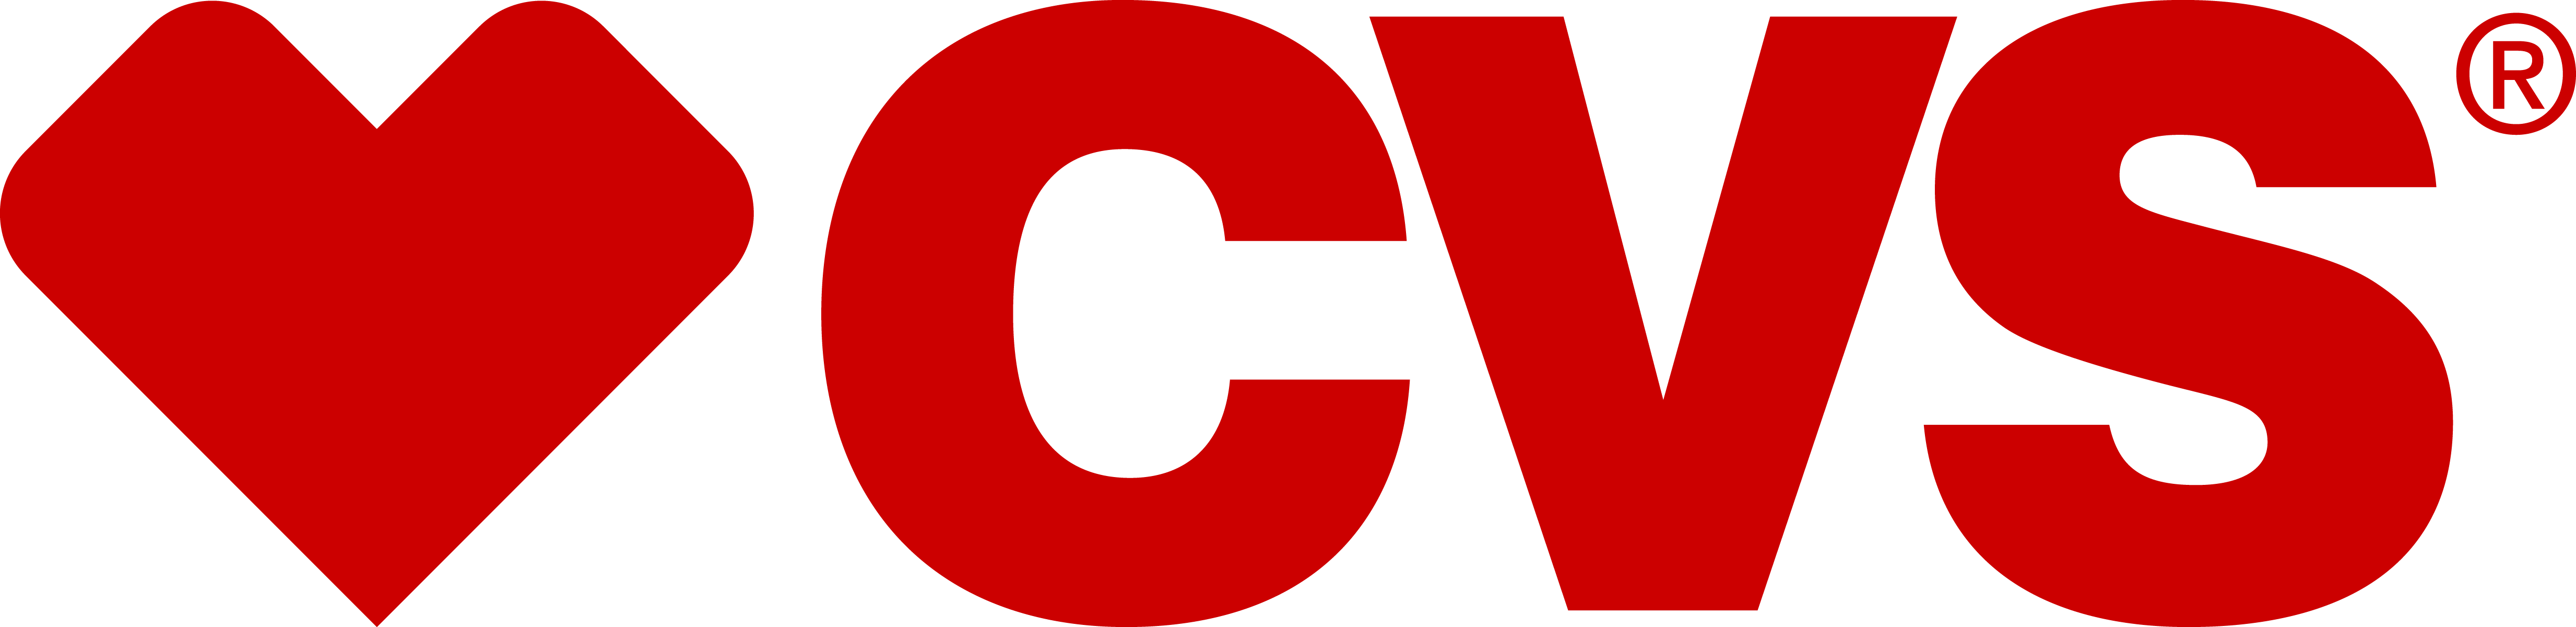 Cvs-logo-reg